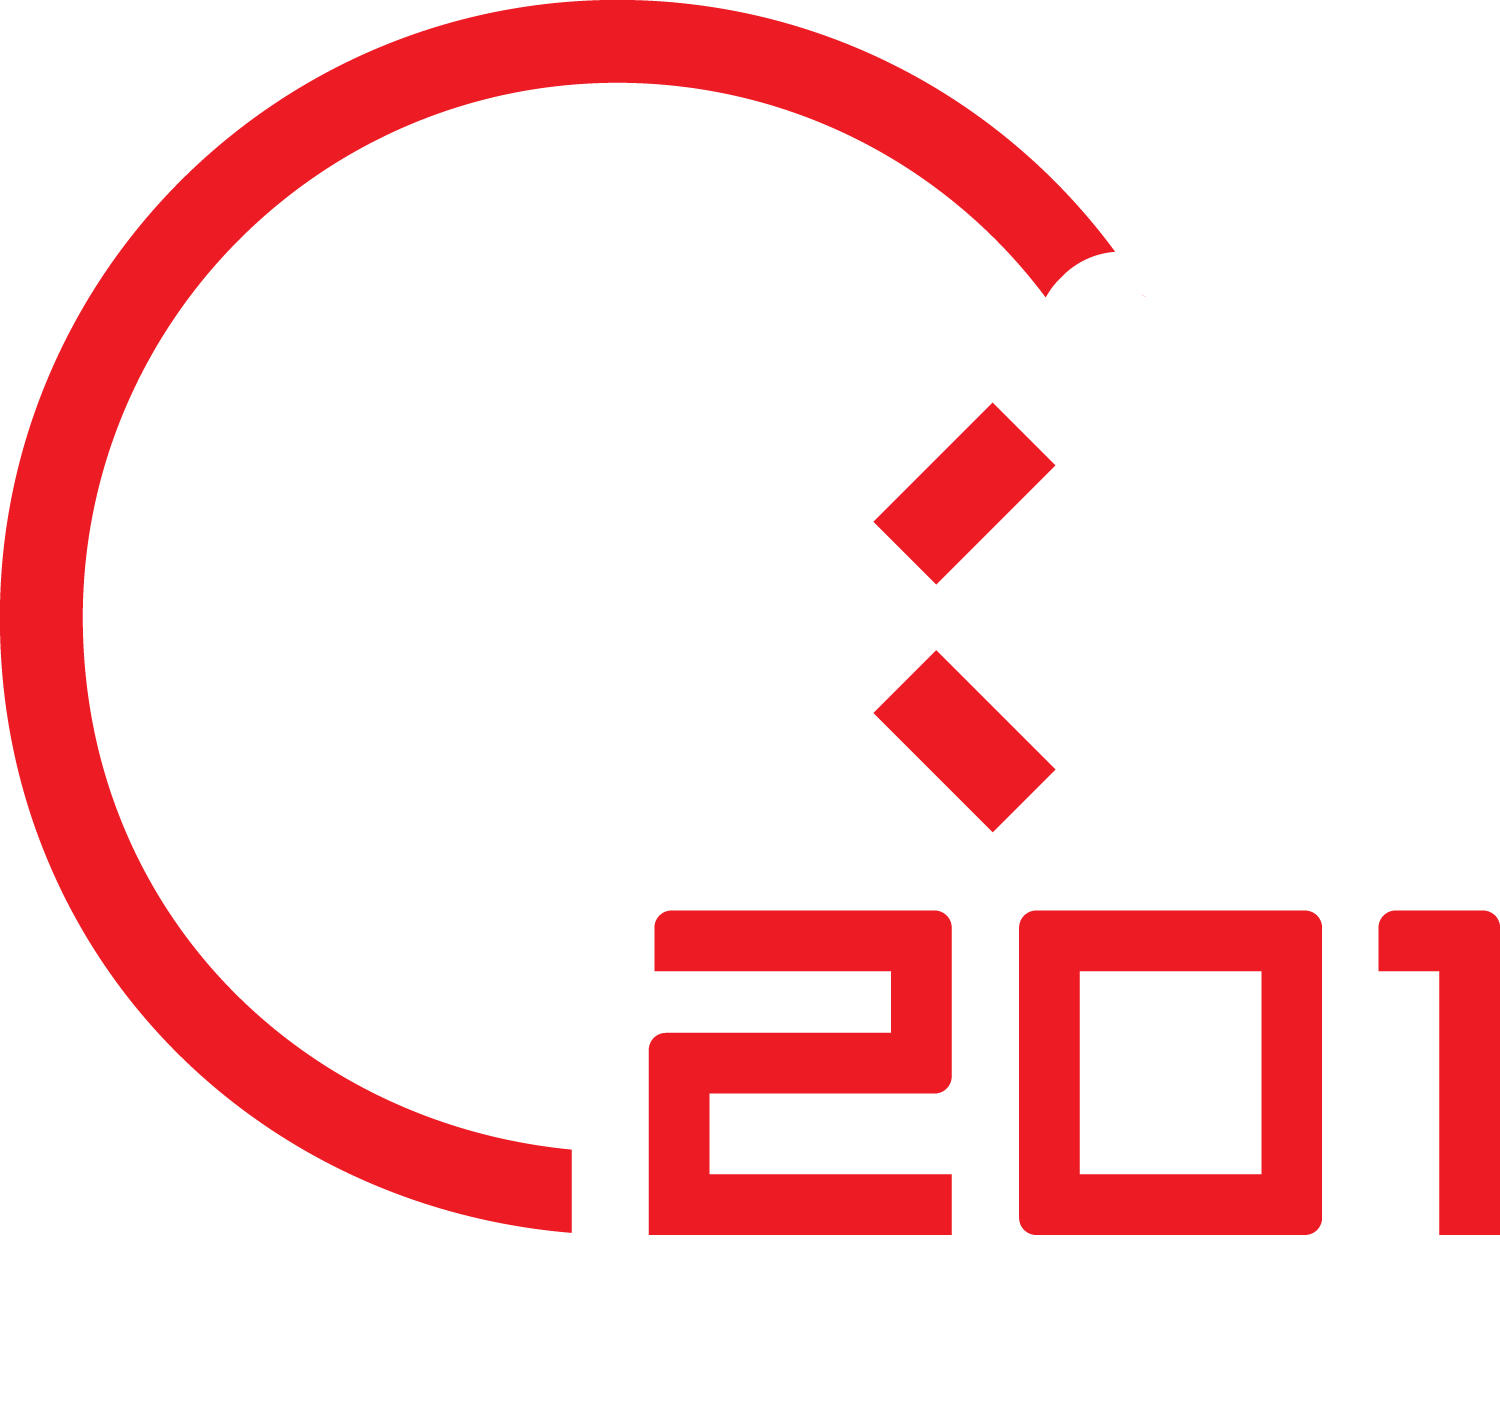 Exit 201